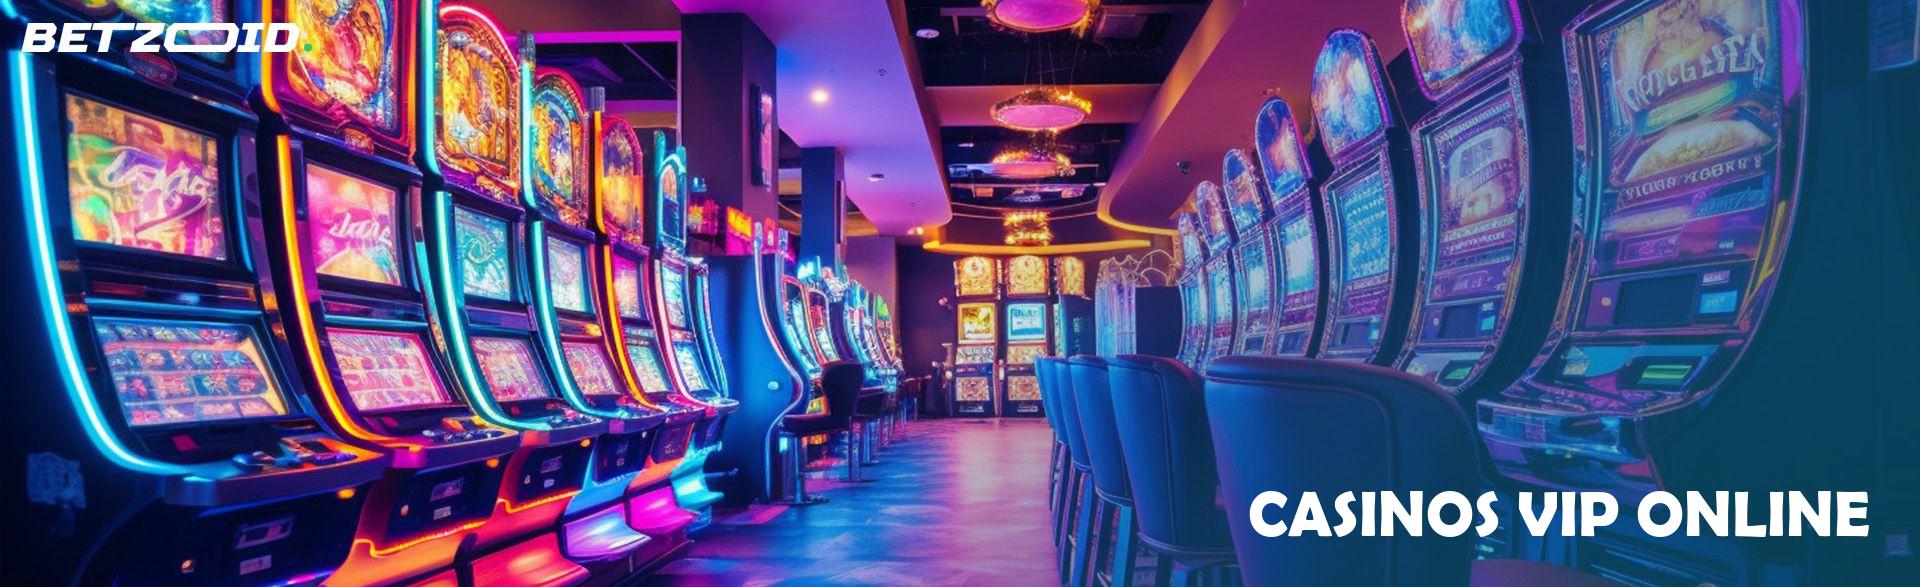 Casinos VIP Online.